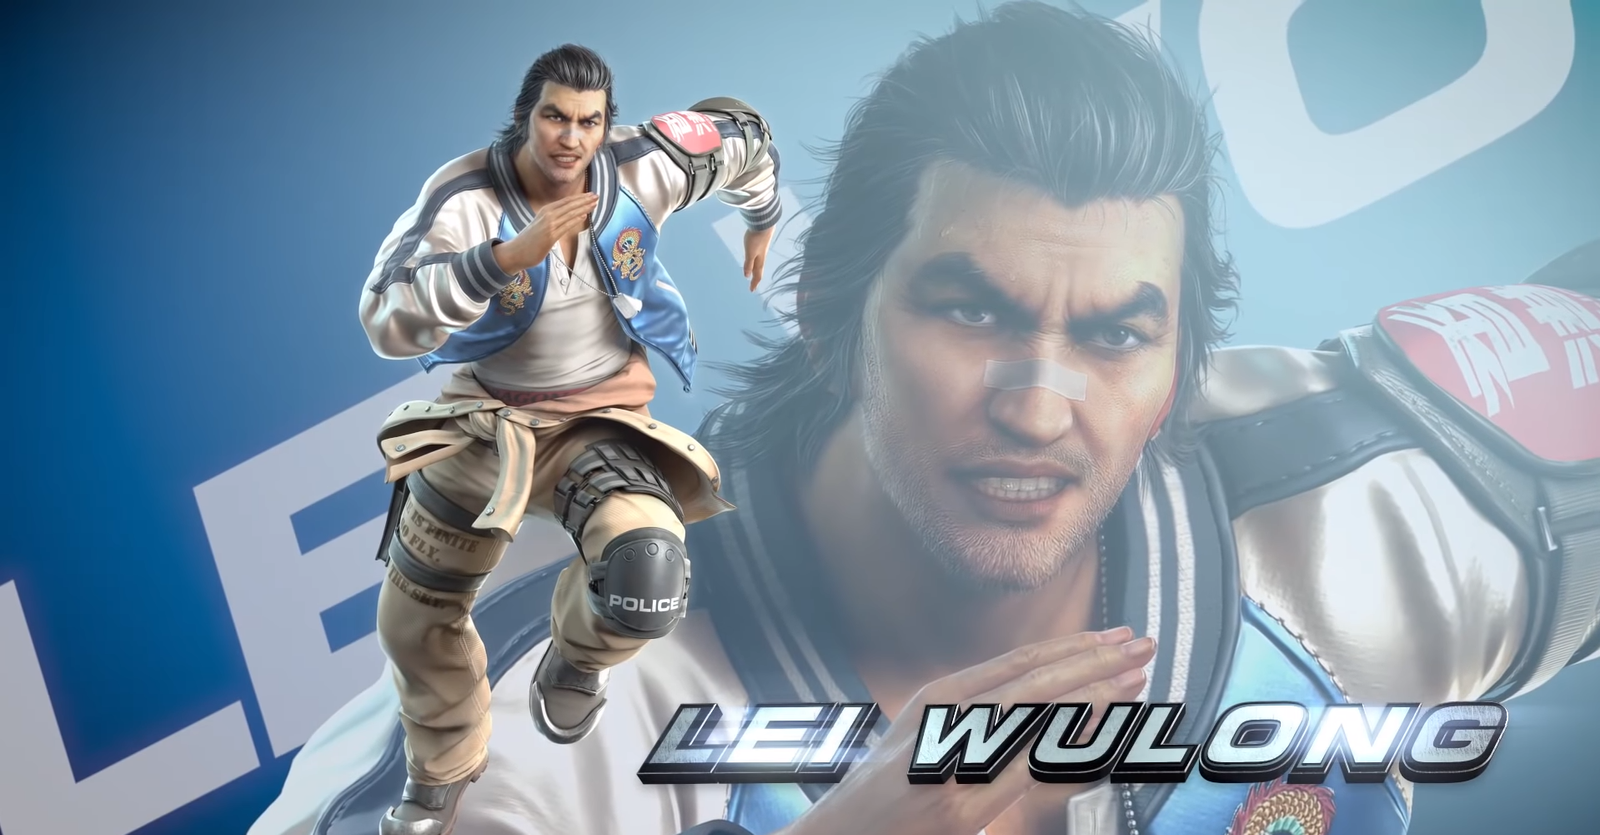 Tidak hanya Negan, Lei Wulong juga ikut di Tekken 7 